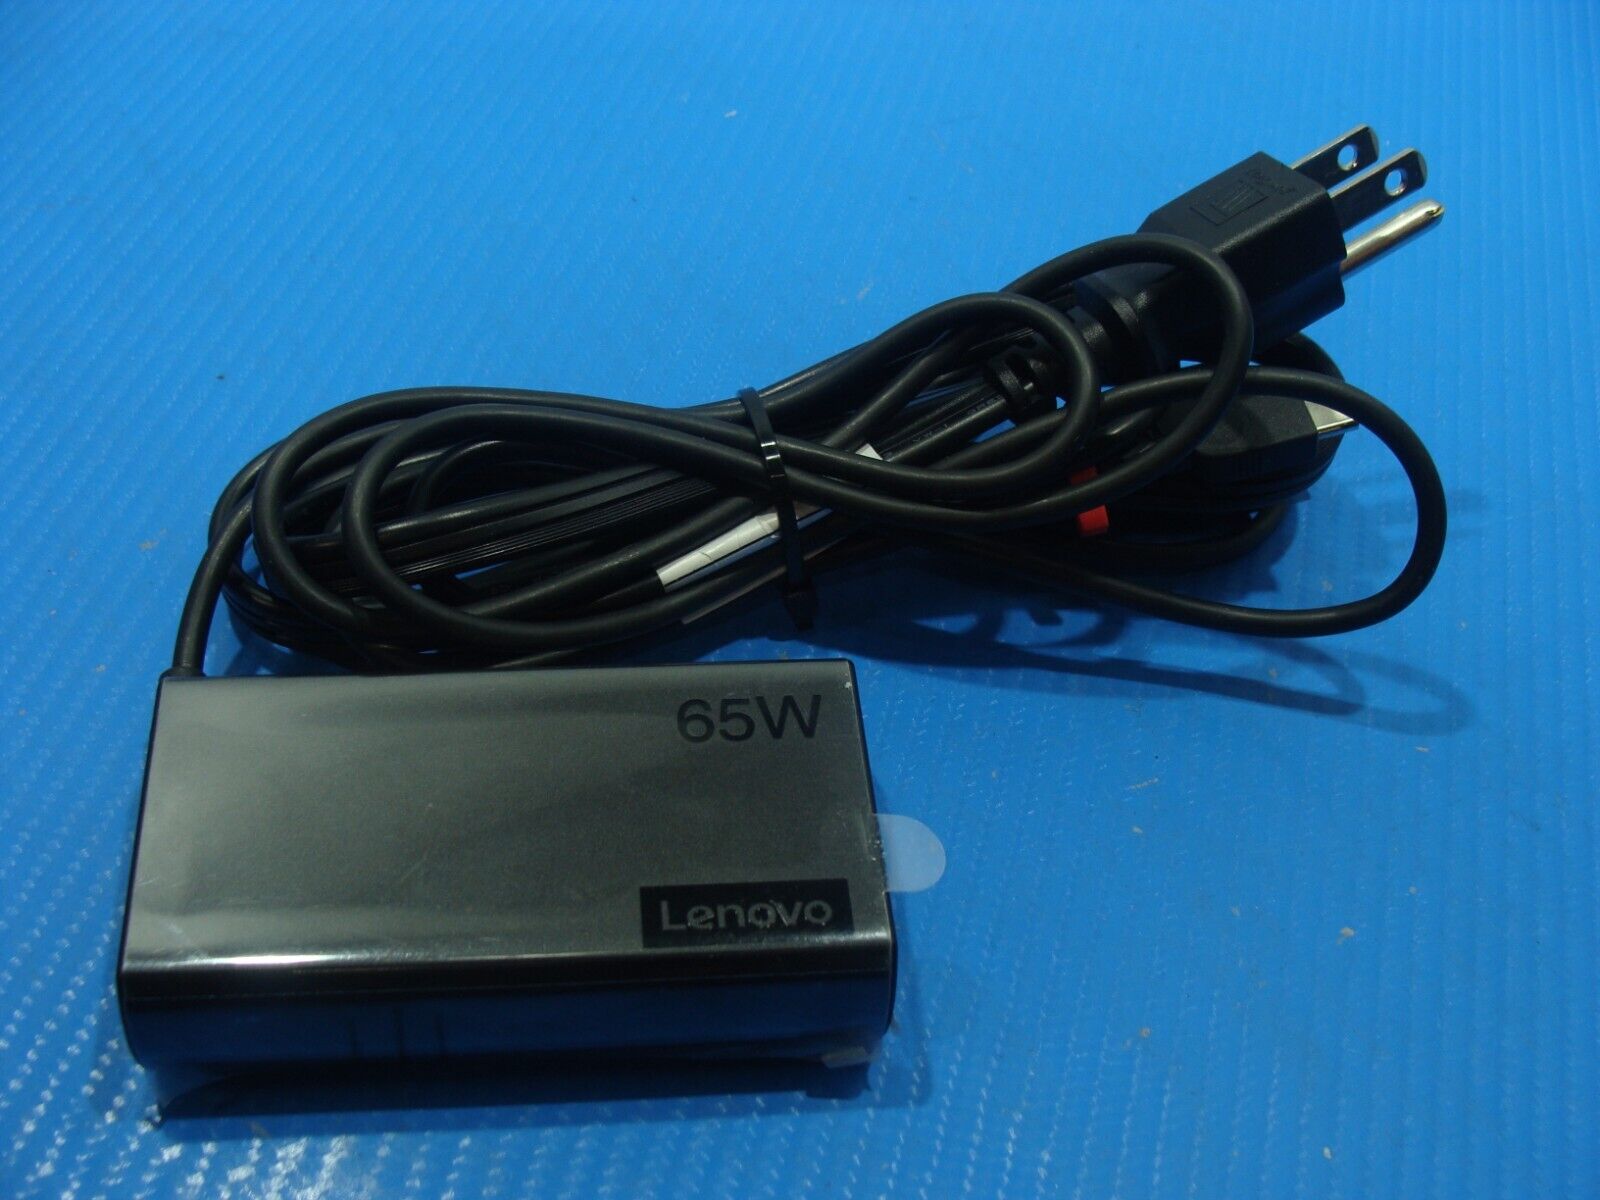 Genuine Lenovo AC Adapter Charger ADLX65YSCC3A SA10R16901 02DL155 65W USB-C